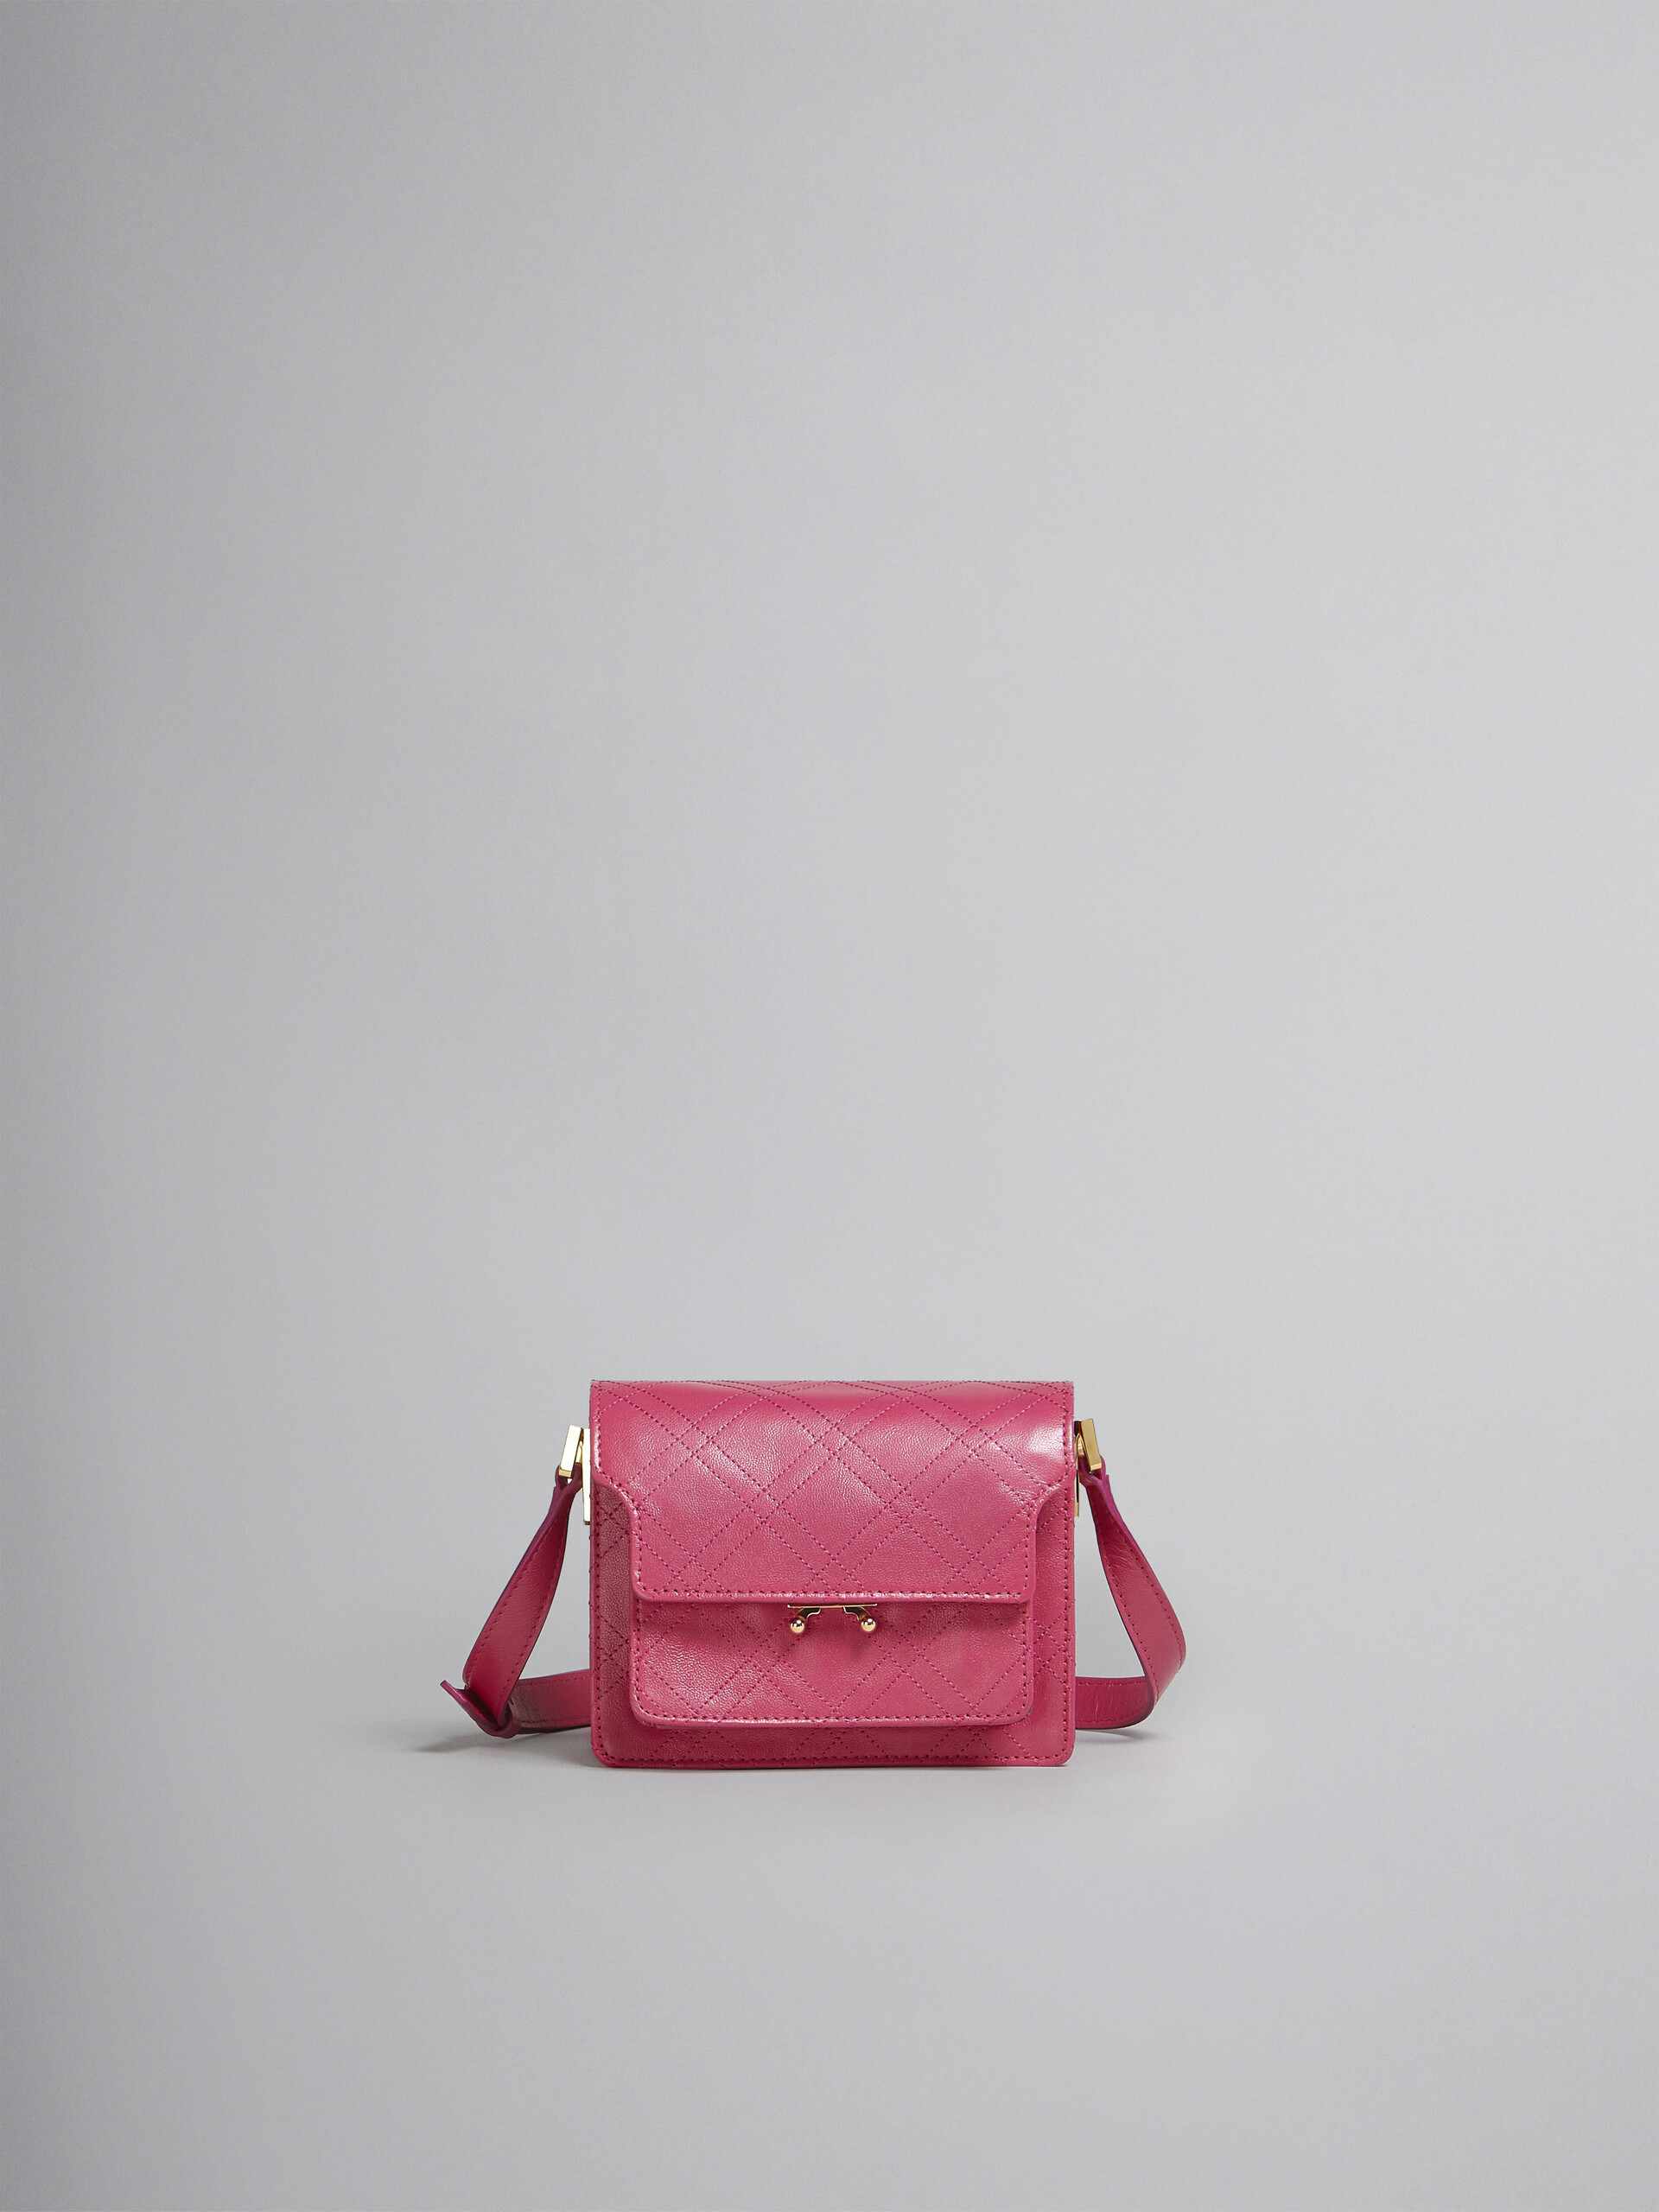 Trunk Soft Mini Bag in fuchsia leather - Shoulder Bag - Image 1